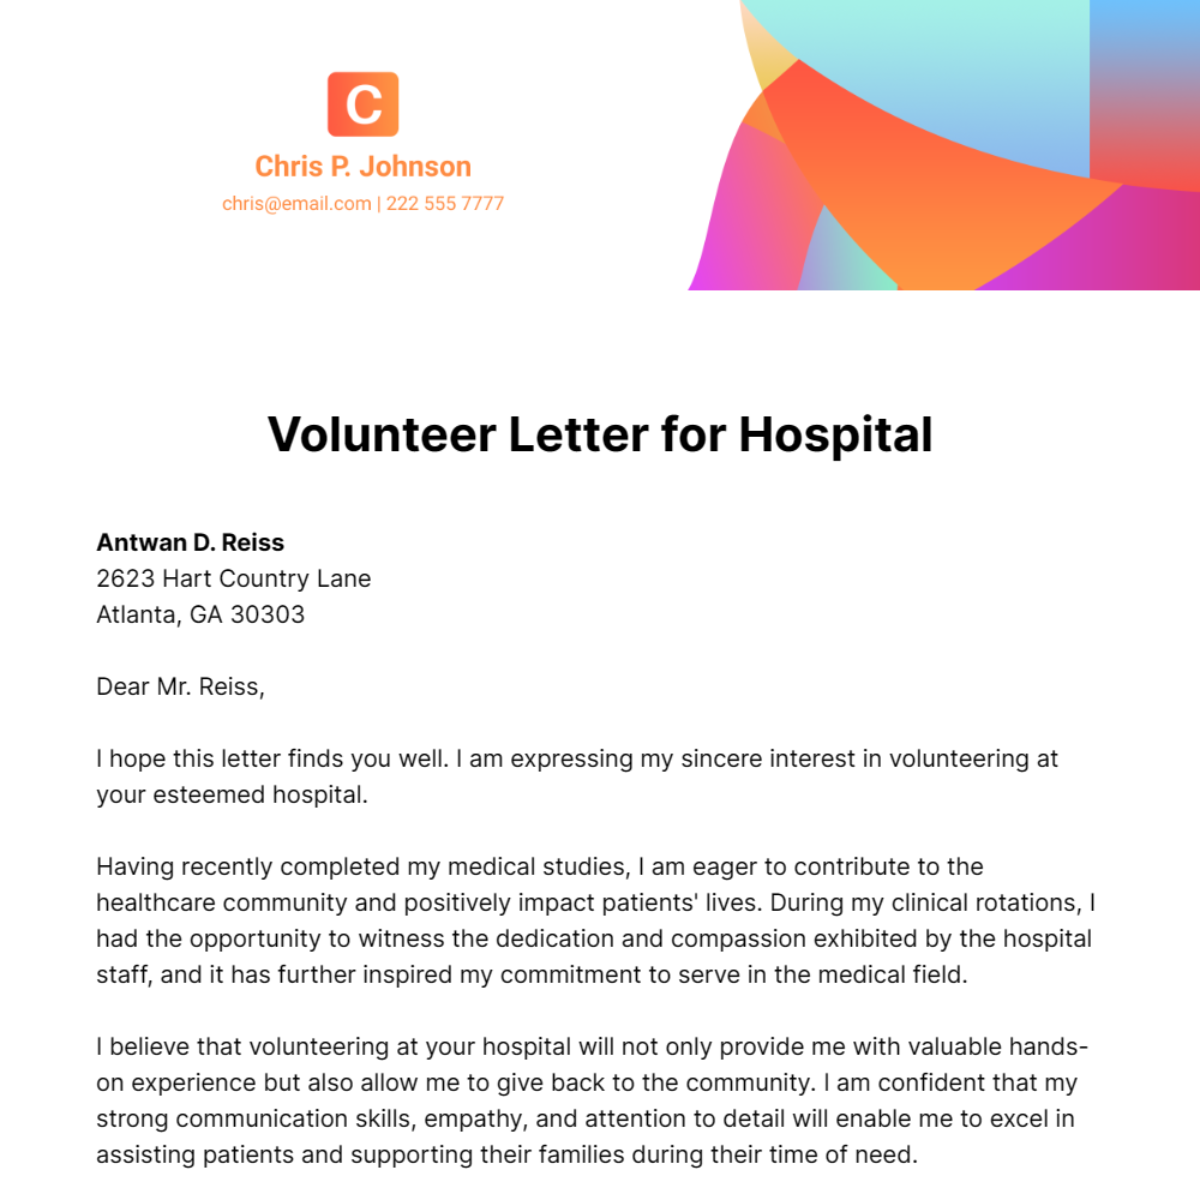 Volunteer Letter for Hospital Template